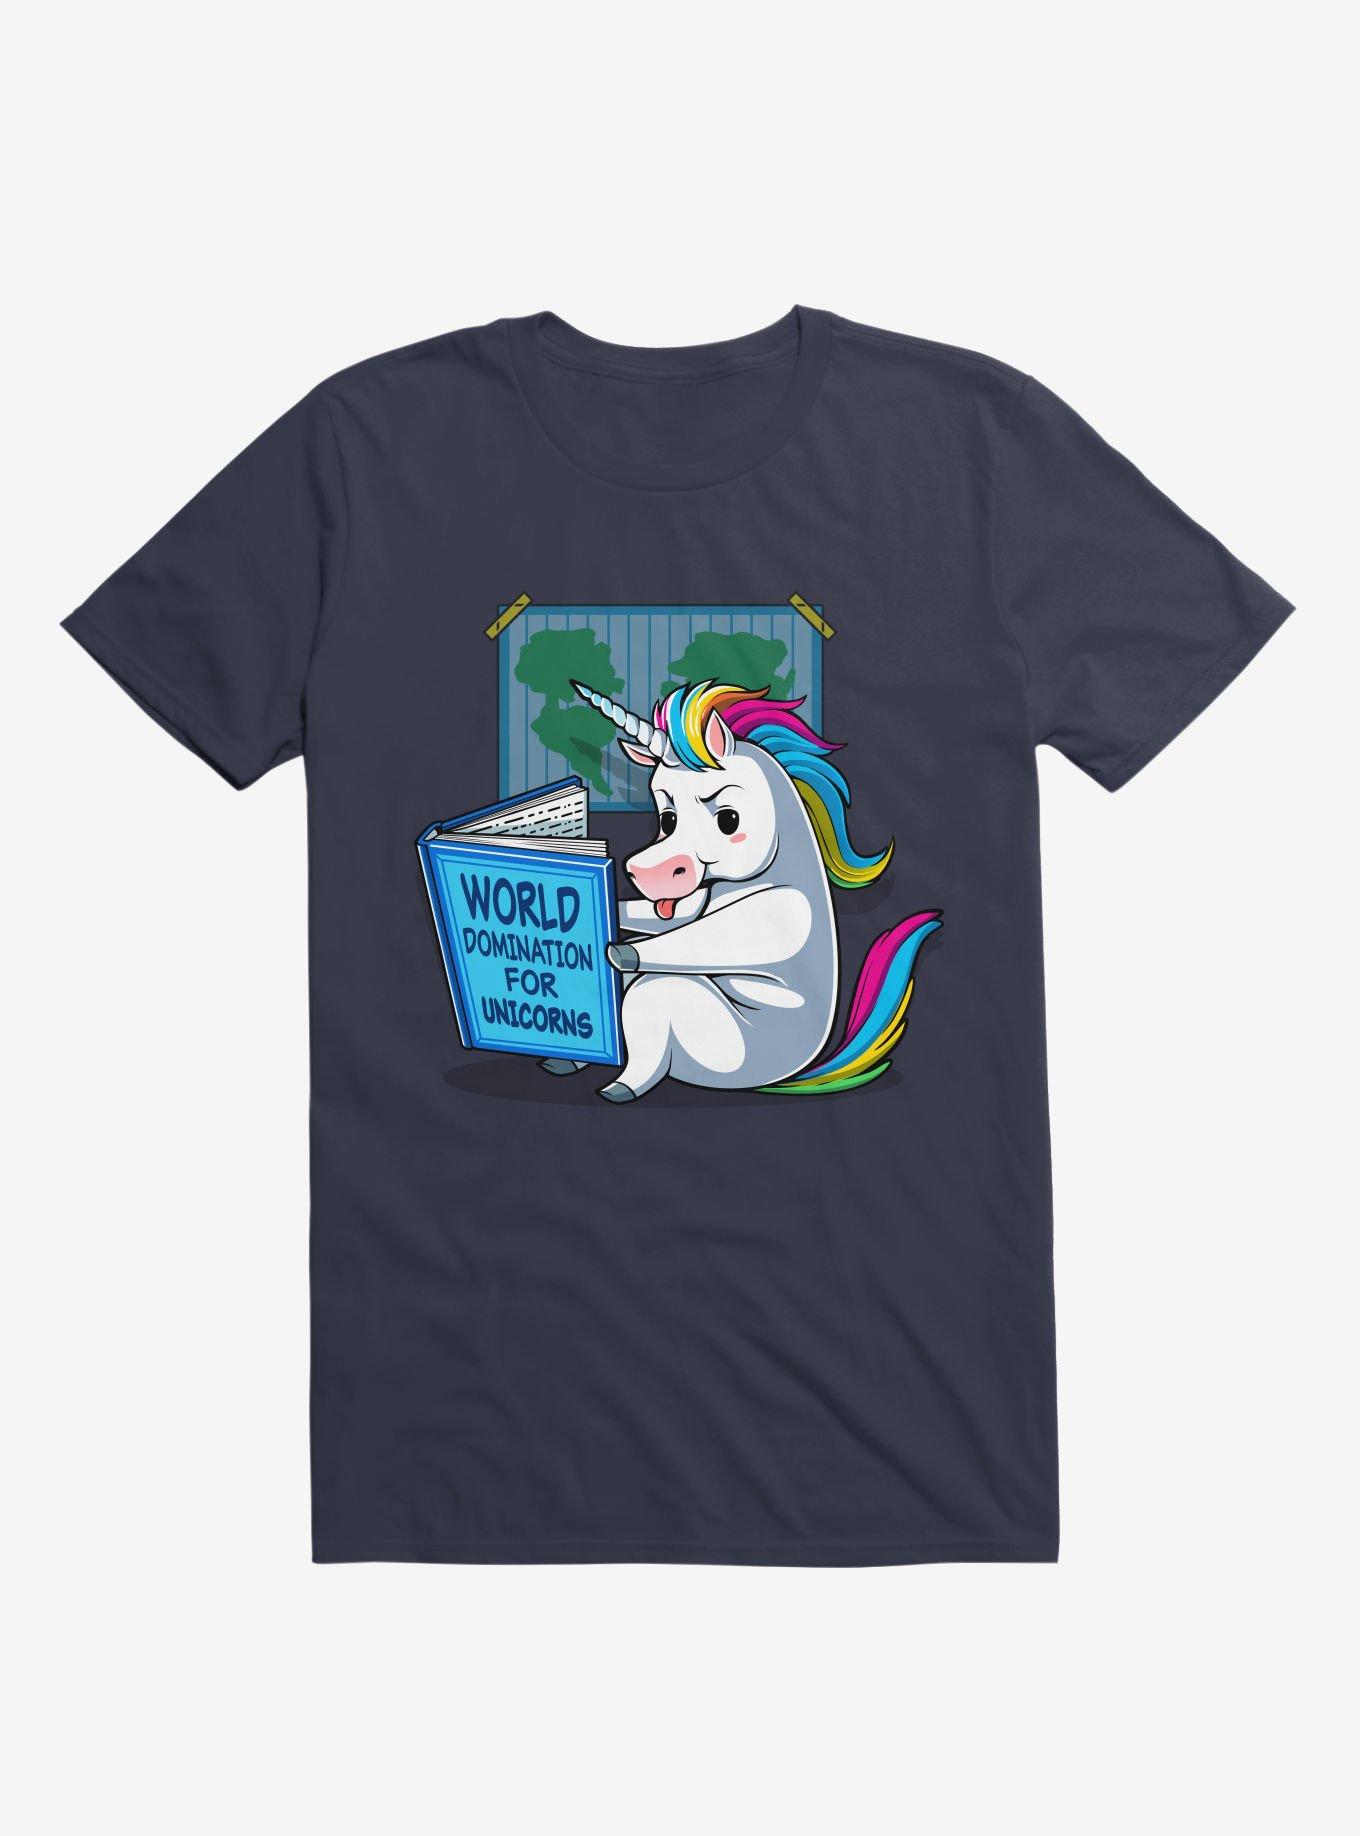 World Domination For Unicorns Navy Blue T-Shirt